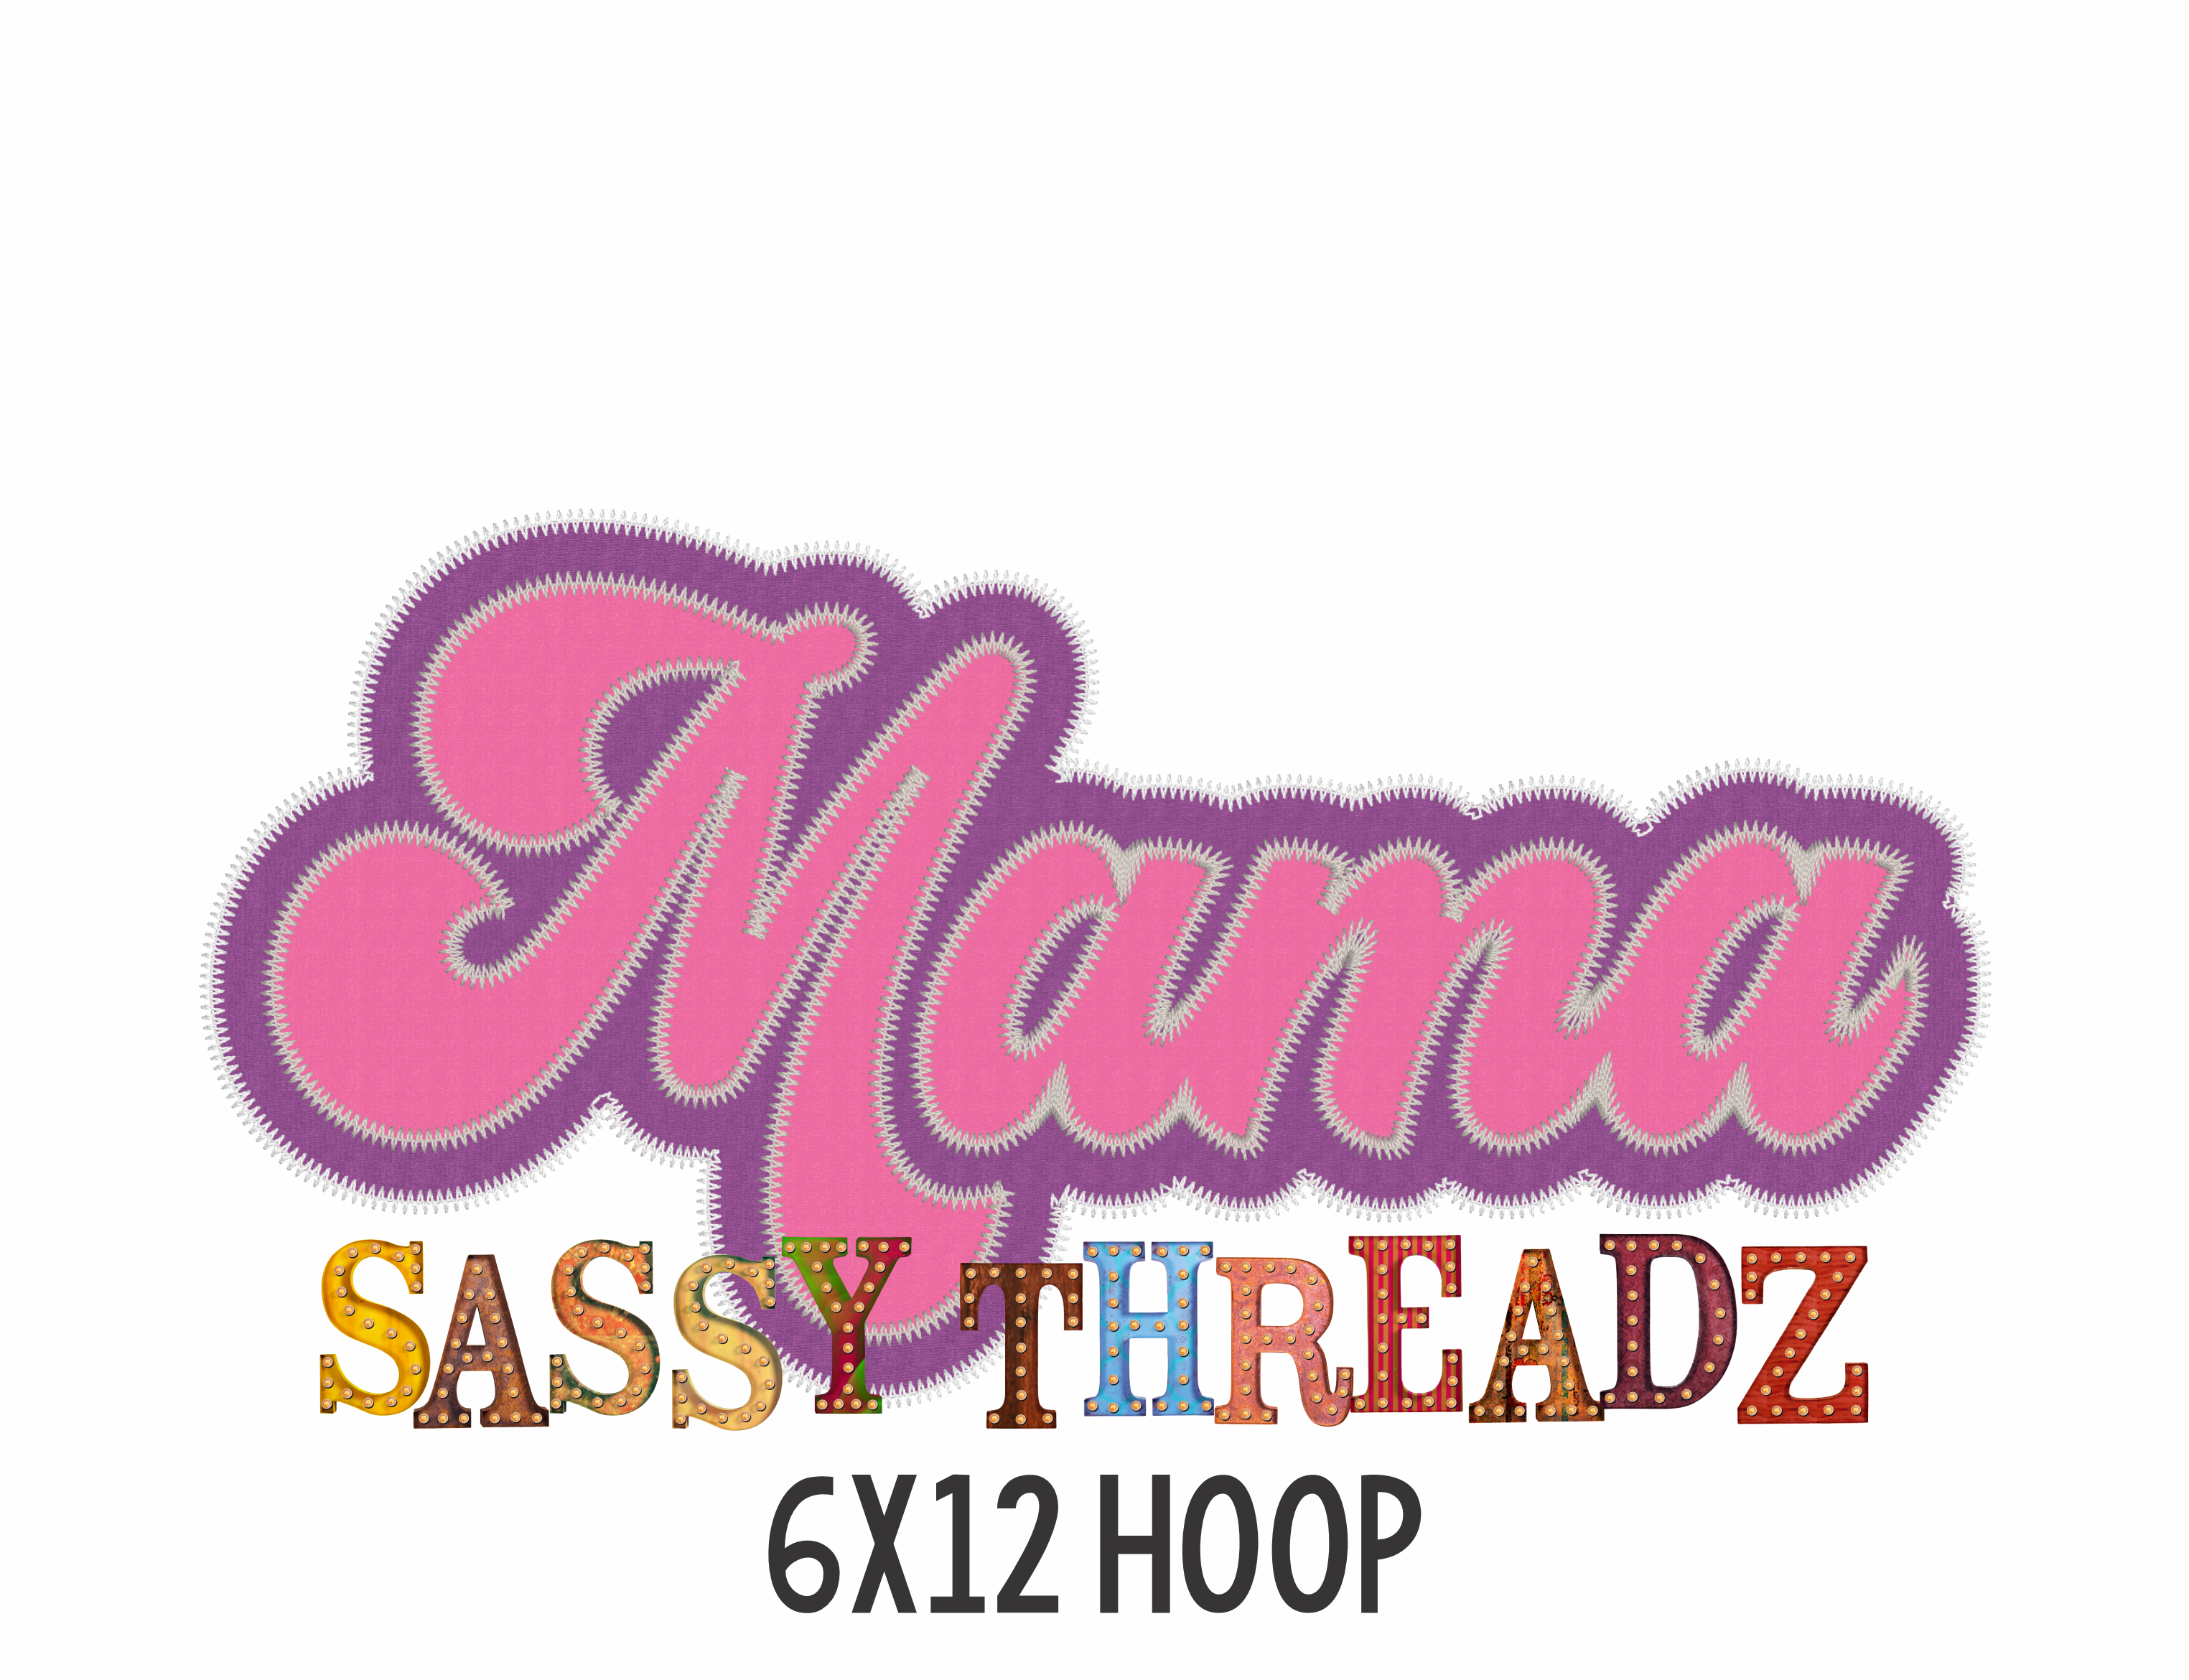 Retro Mama Zig Zag and Bean Stitch Script Stacked Embroidery Download - Sassy Threadz